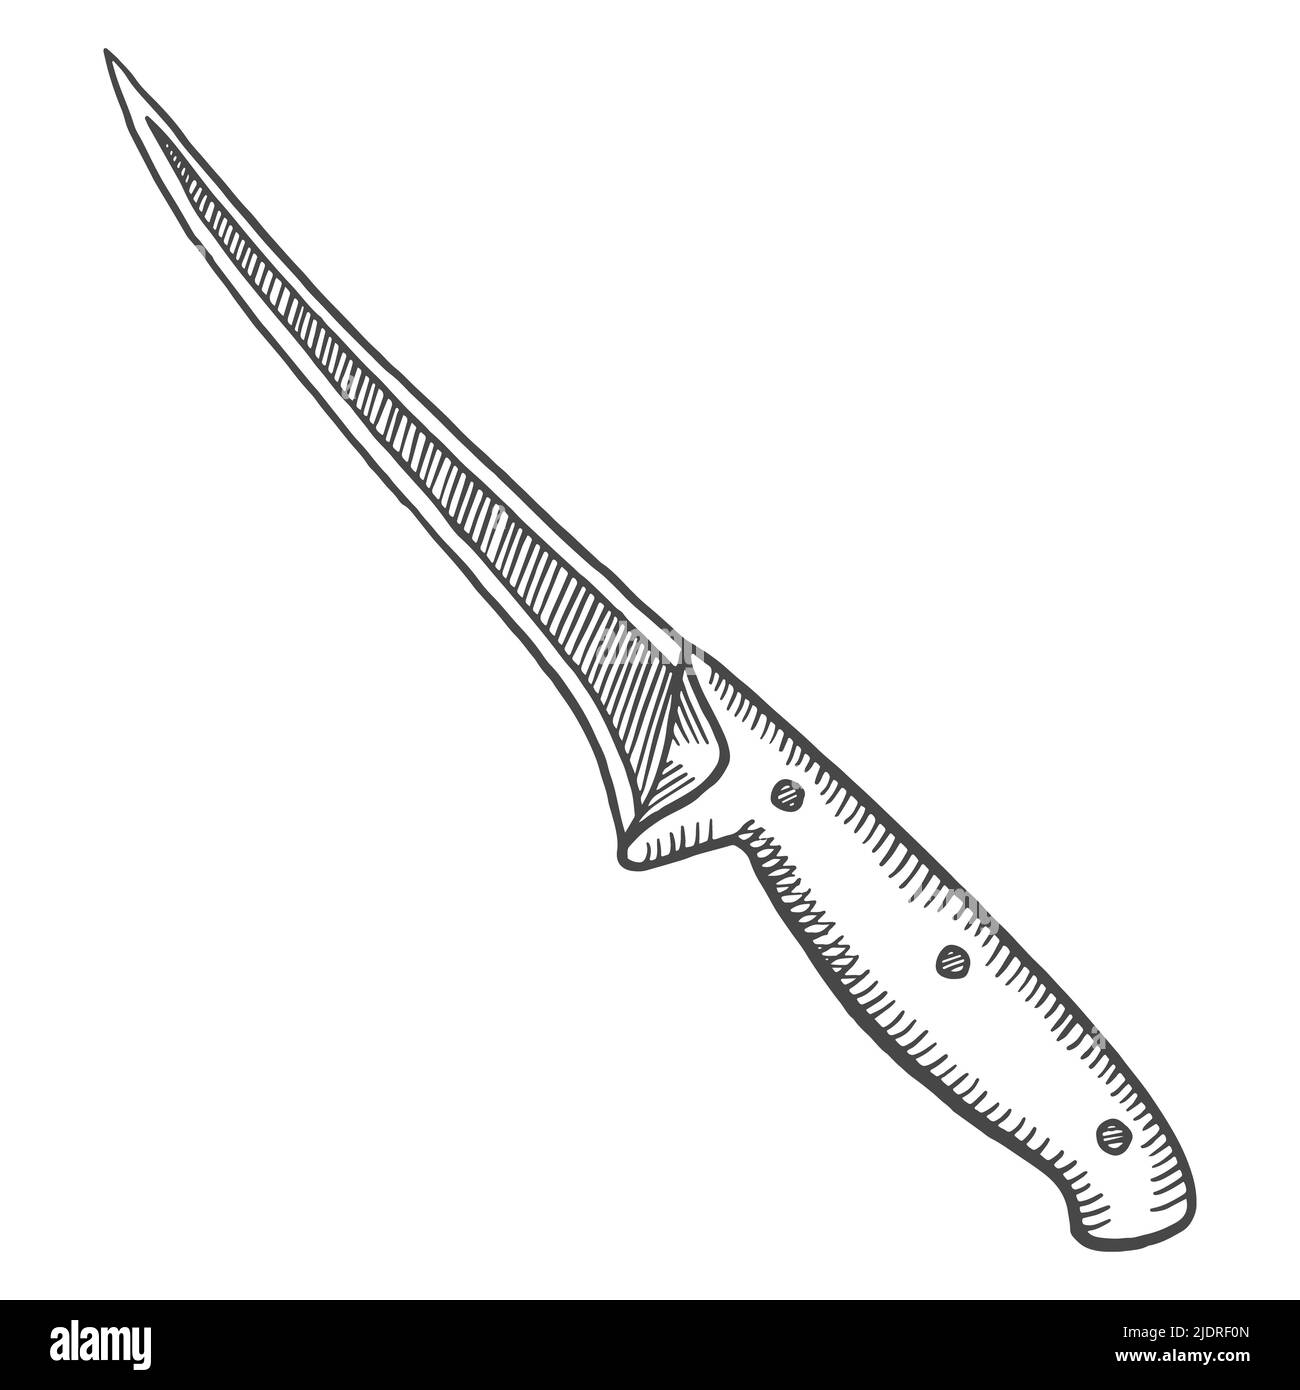 https://c8.alamy.com/comp/2JDRF0N/kitchen-boning-knife-isolated-doodle-hand-drawn-sketch-with-outline-style-vector-illustration-2JDRF0N.jpg